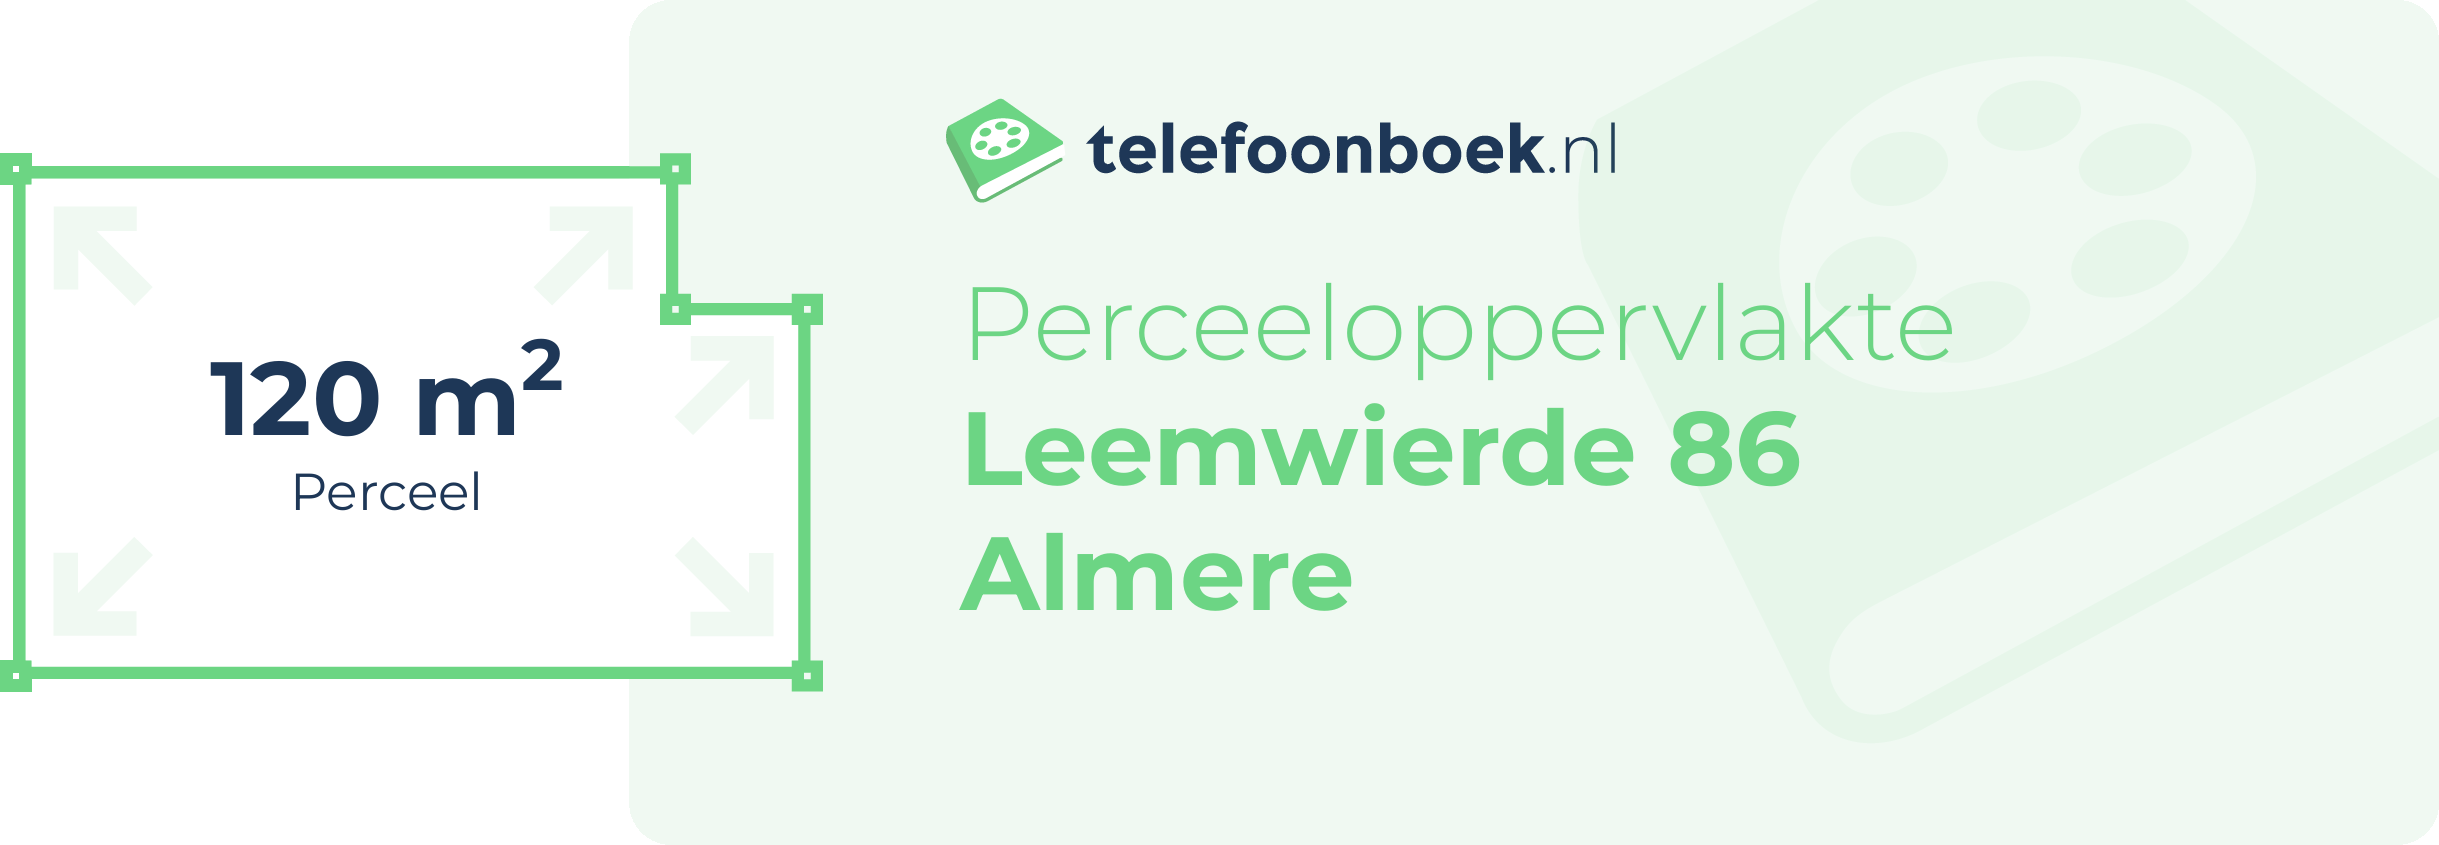 Perceeloppervlakte Leemwierde 86 Almere